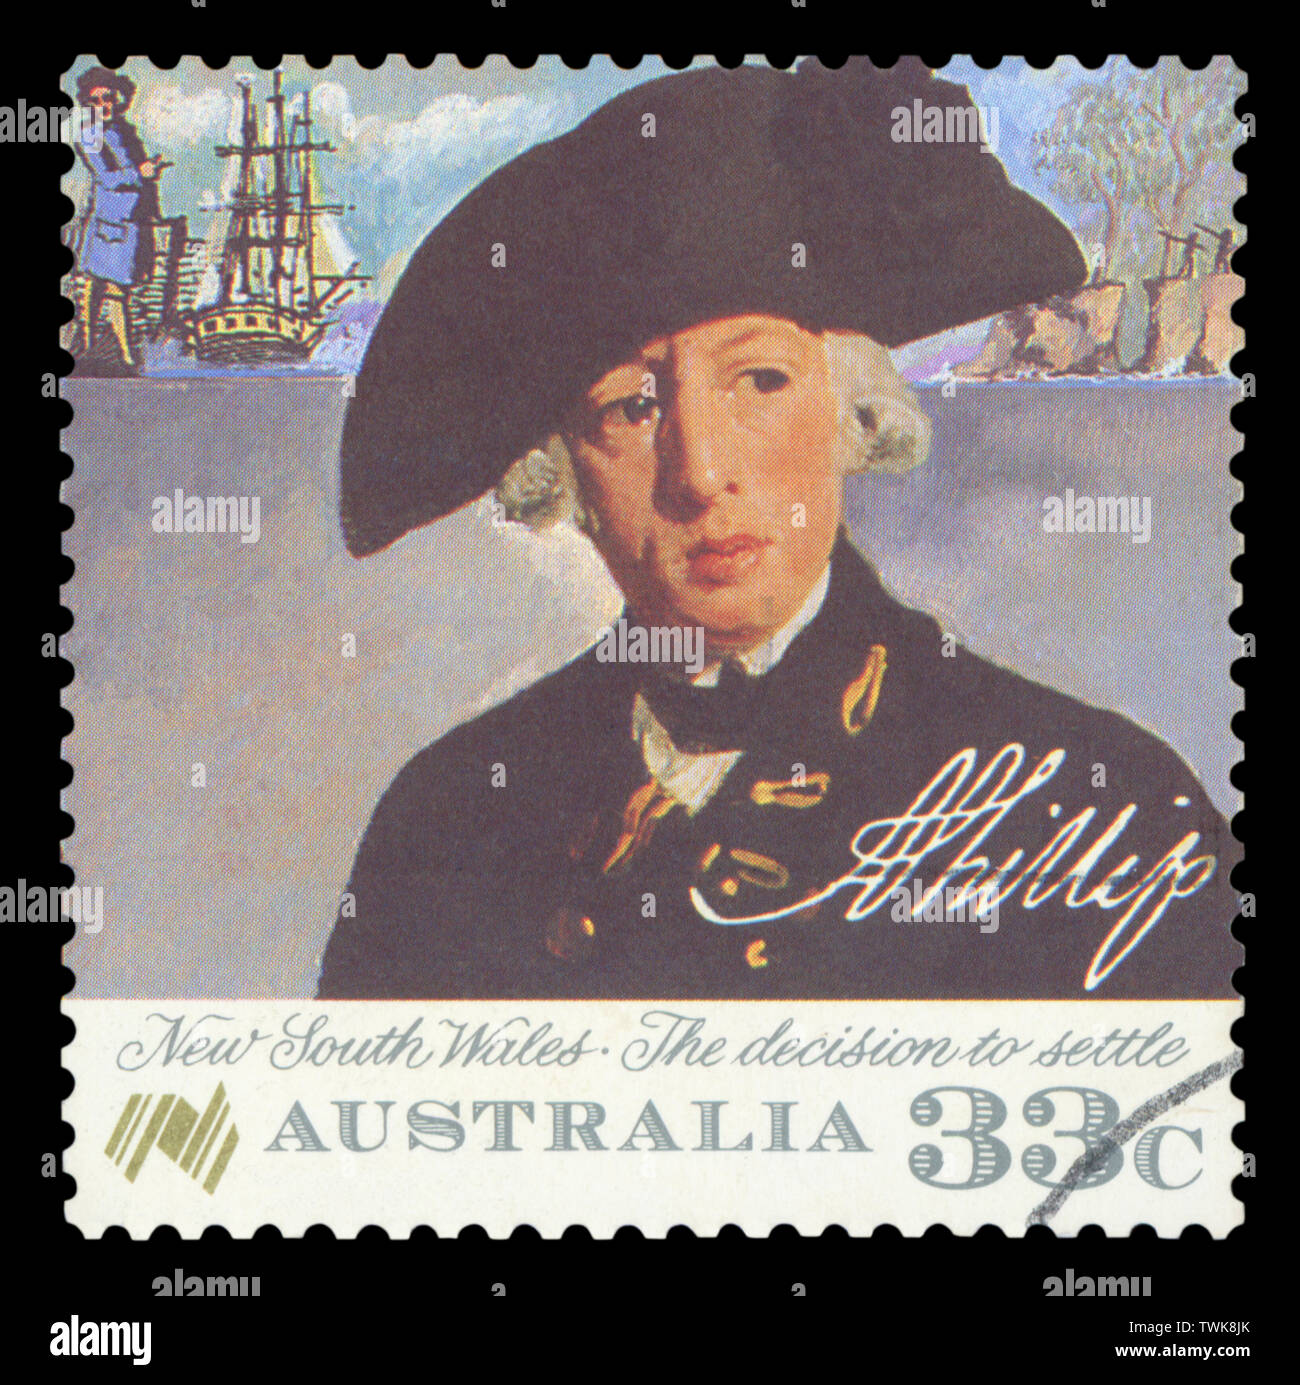 AUSTRALIA - CIRCA 1986:A Cancelled postage stamp from Australia illustrating the decision to settle in australia, circa 1986. Stock Photo